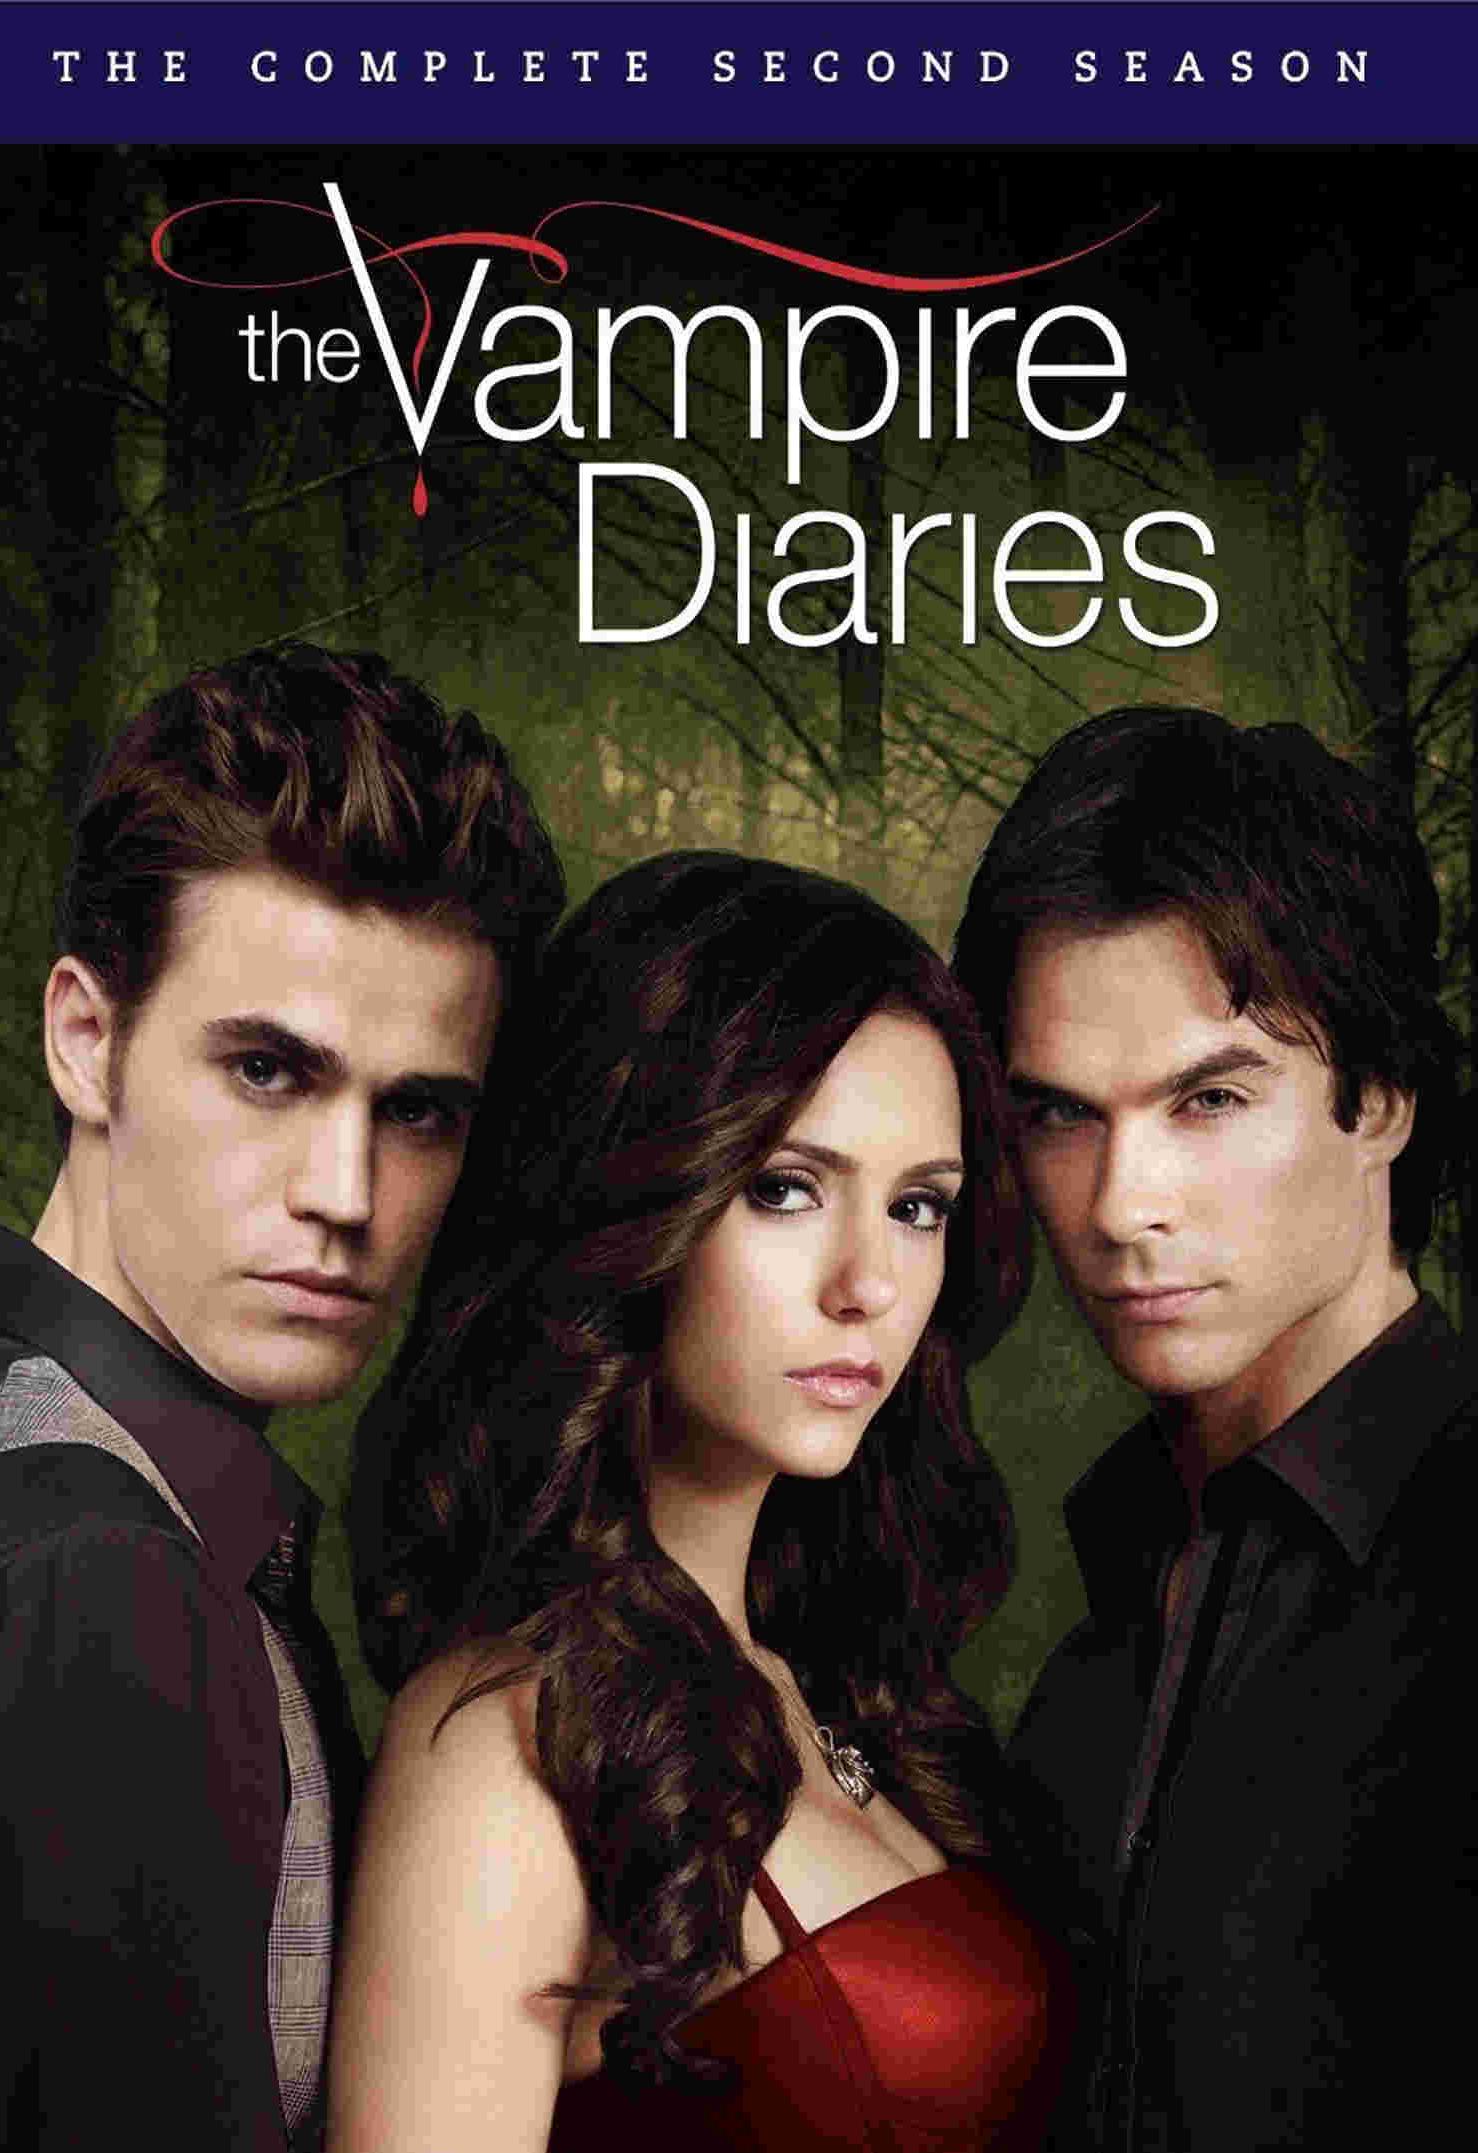 the vampire diaries season 2 vámpírnaplók 2.évad dvd borító cover.jpg